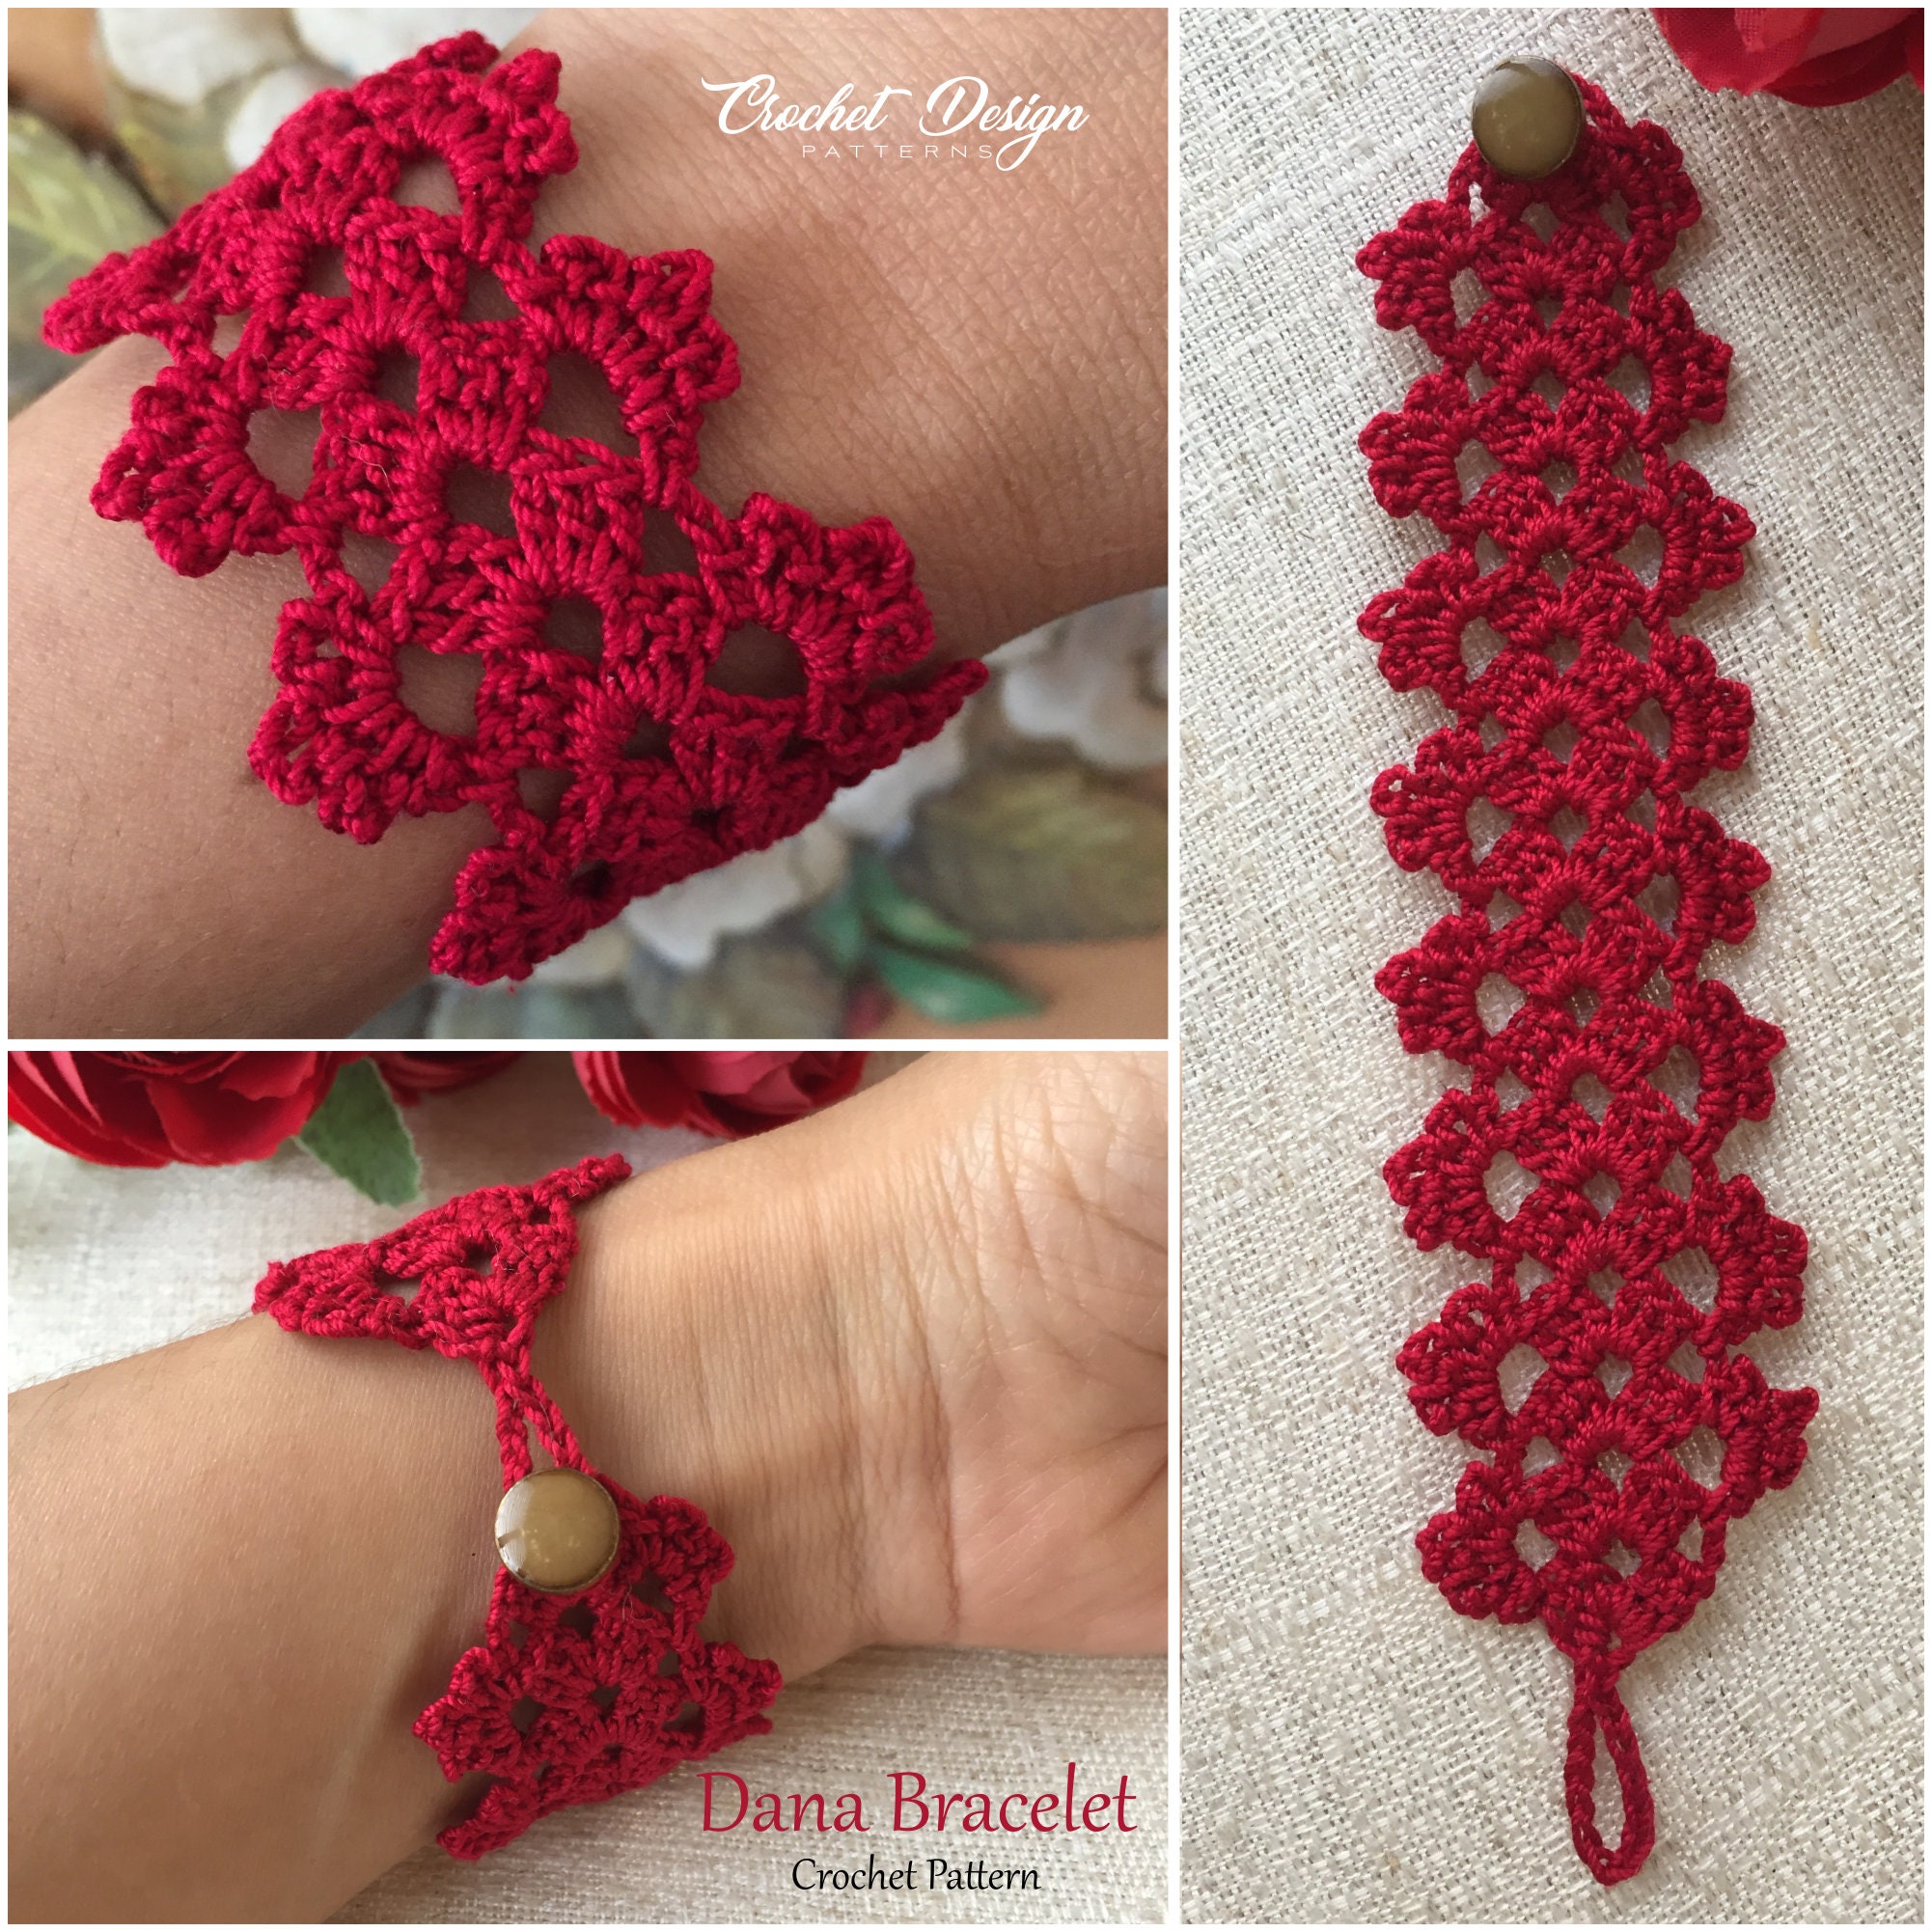 Projects by Jane: Broomstick Crochet Lace Bracelets